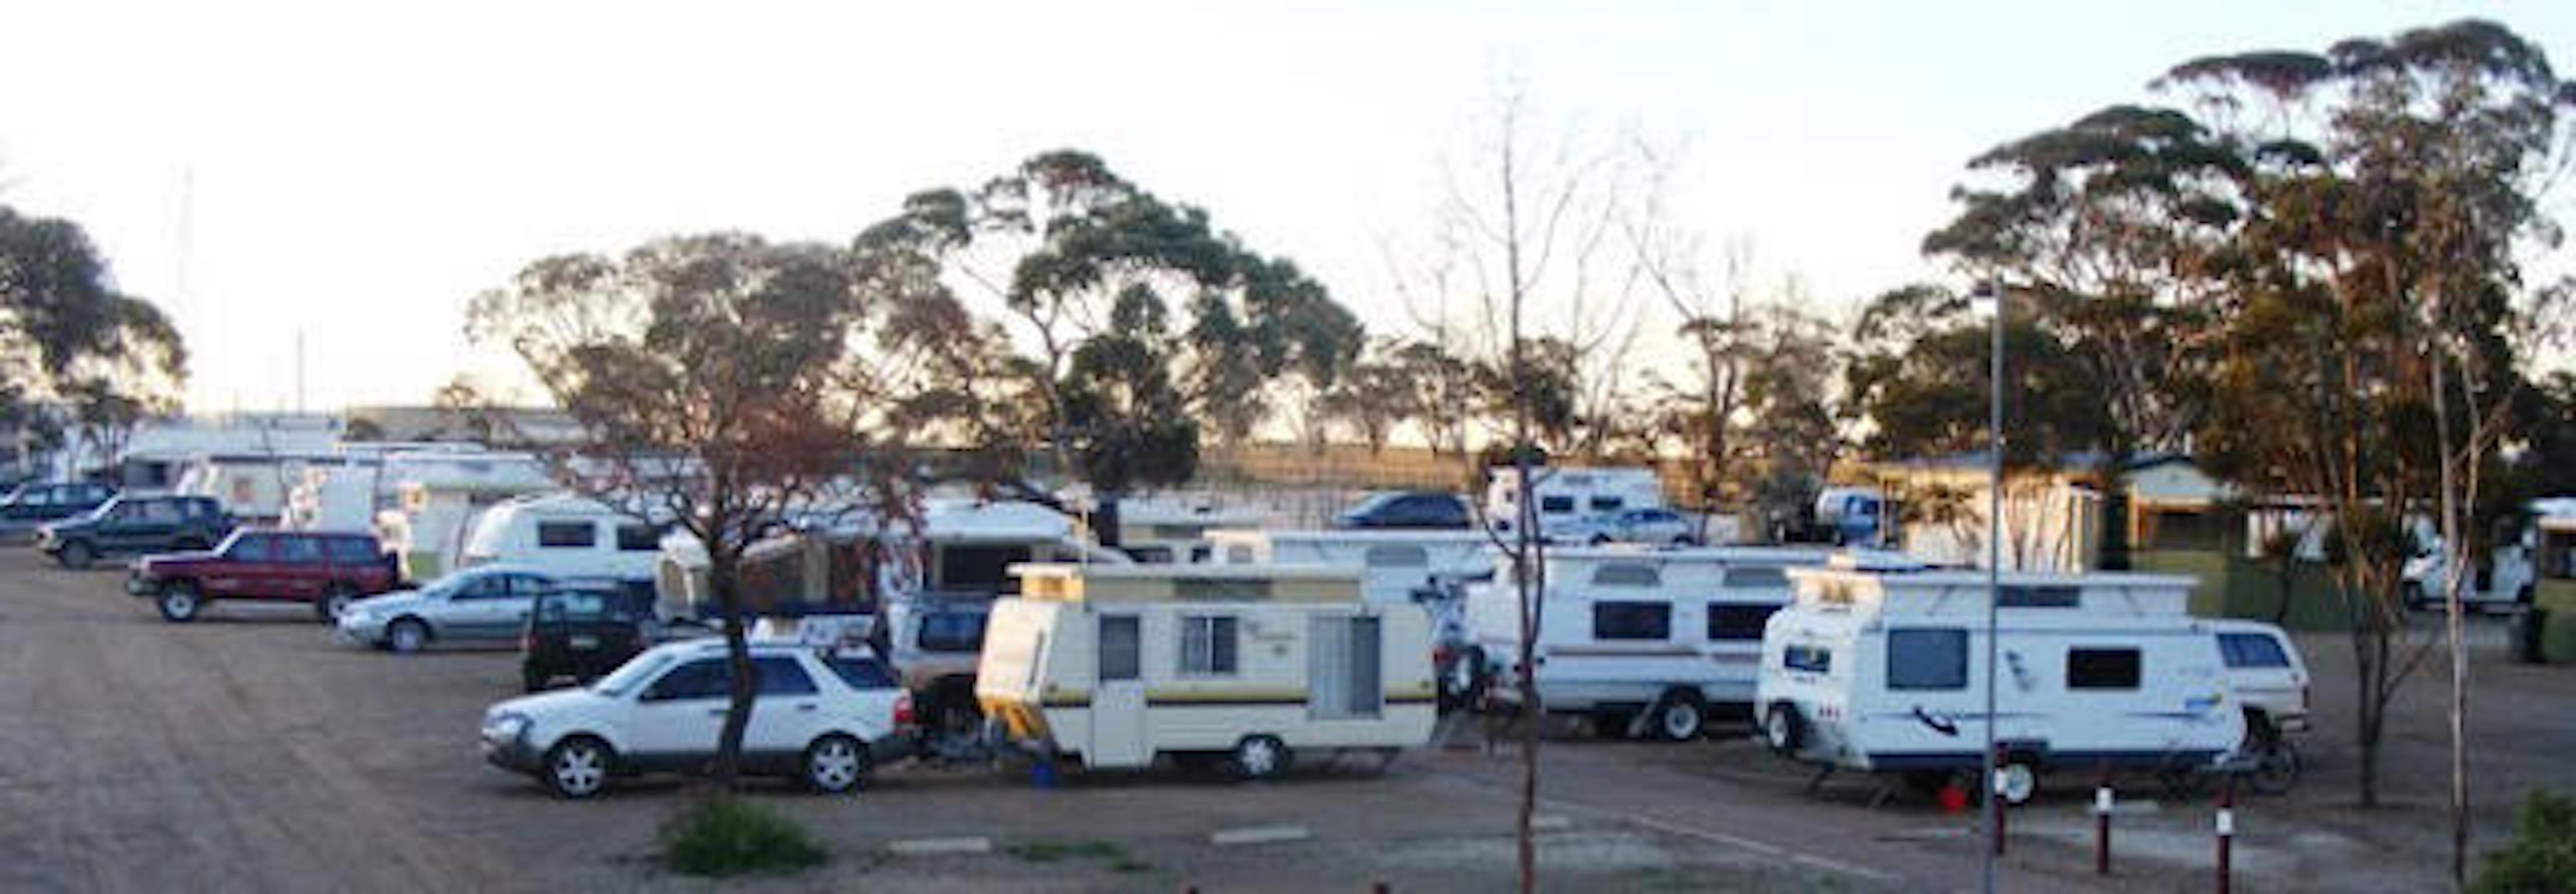 Woomera Traveller's Village and Caravan Park - Kingaroy Accommodation